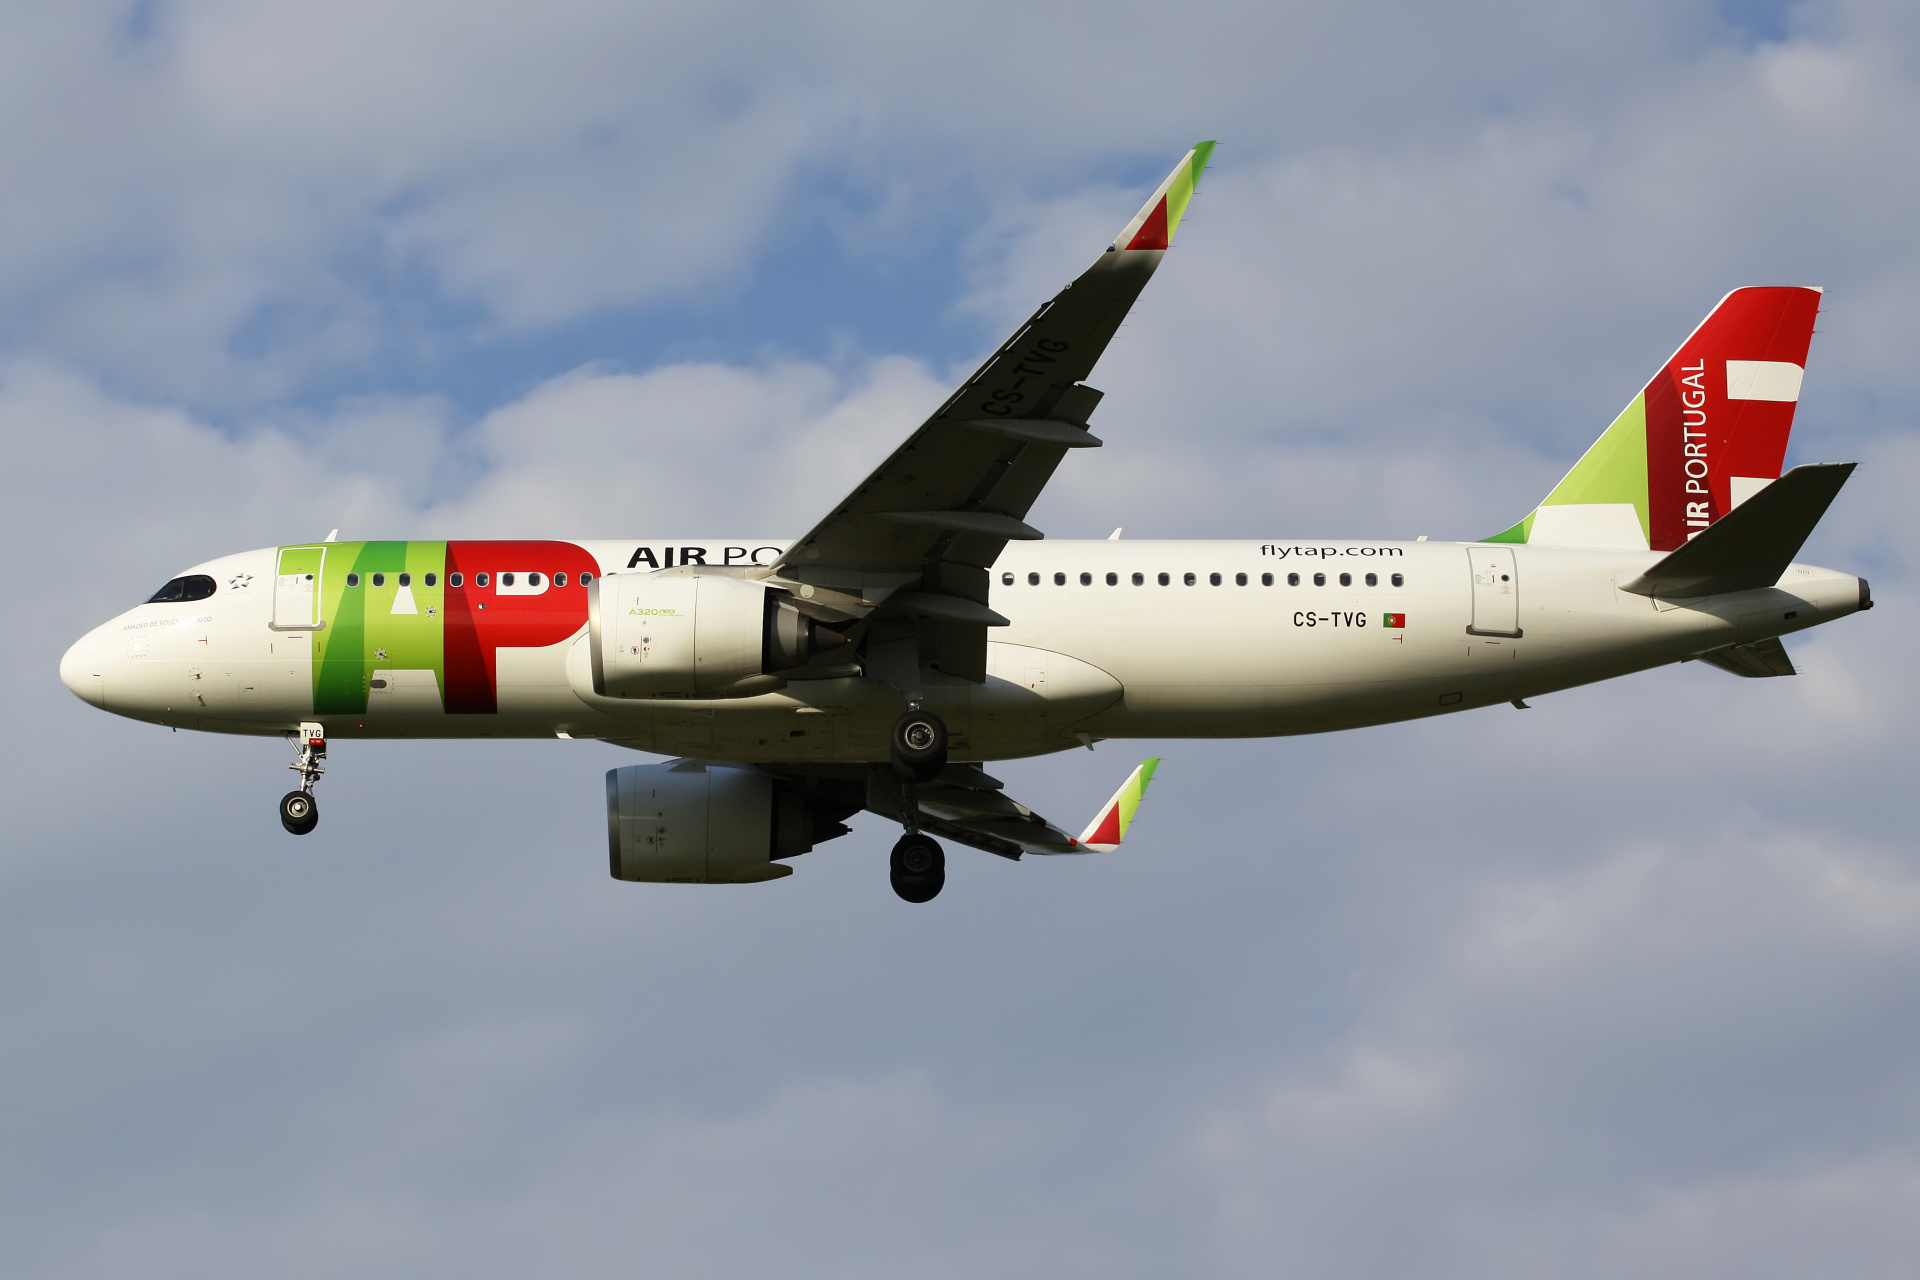 CS-TVG (Aircraft » EPWA Spotting » Airbus A320neo » TAP Air Portugal)